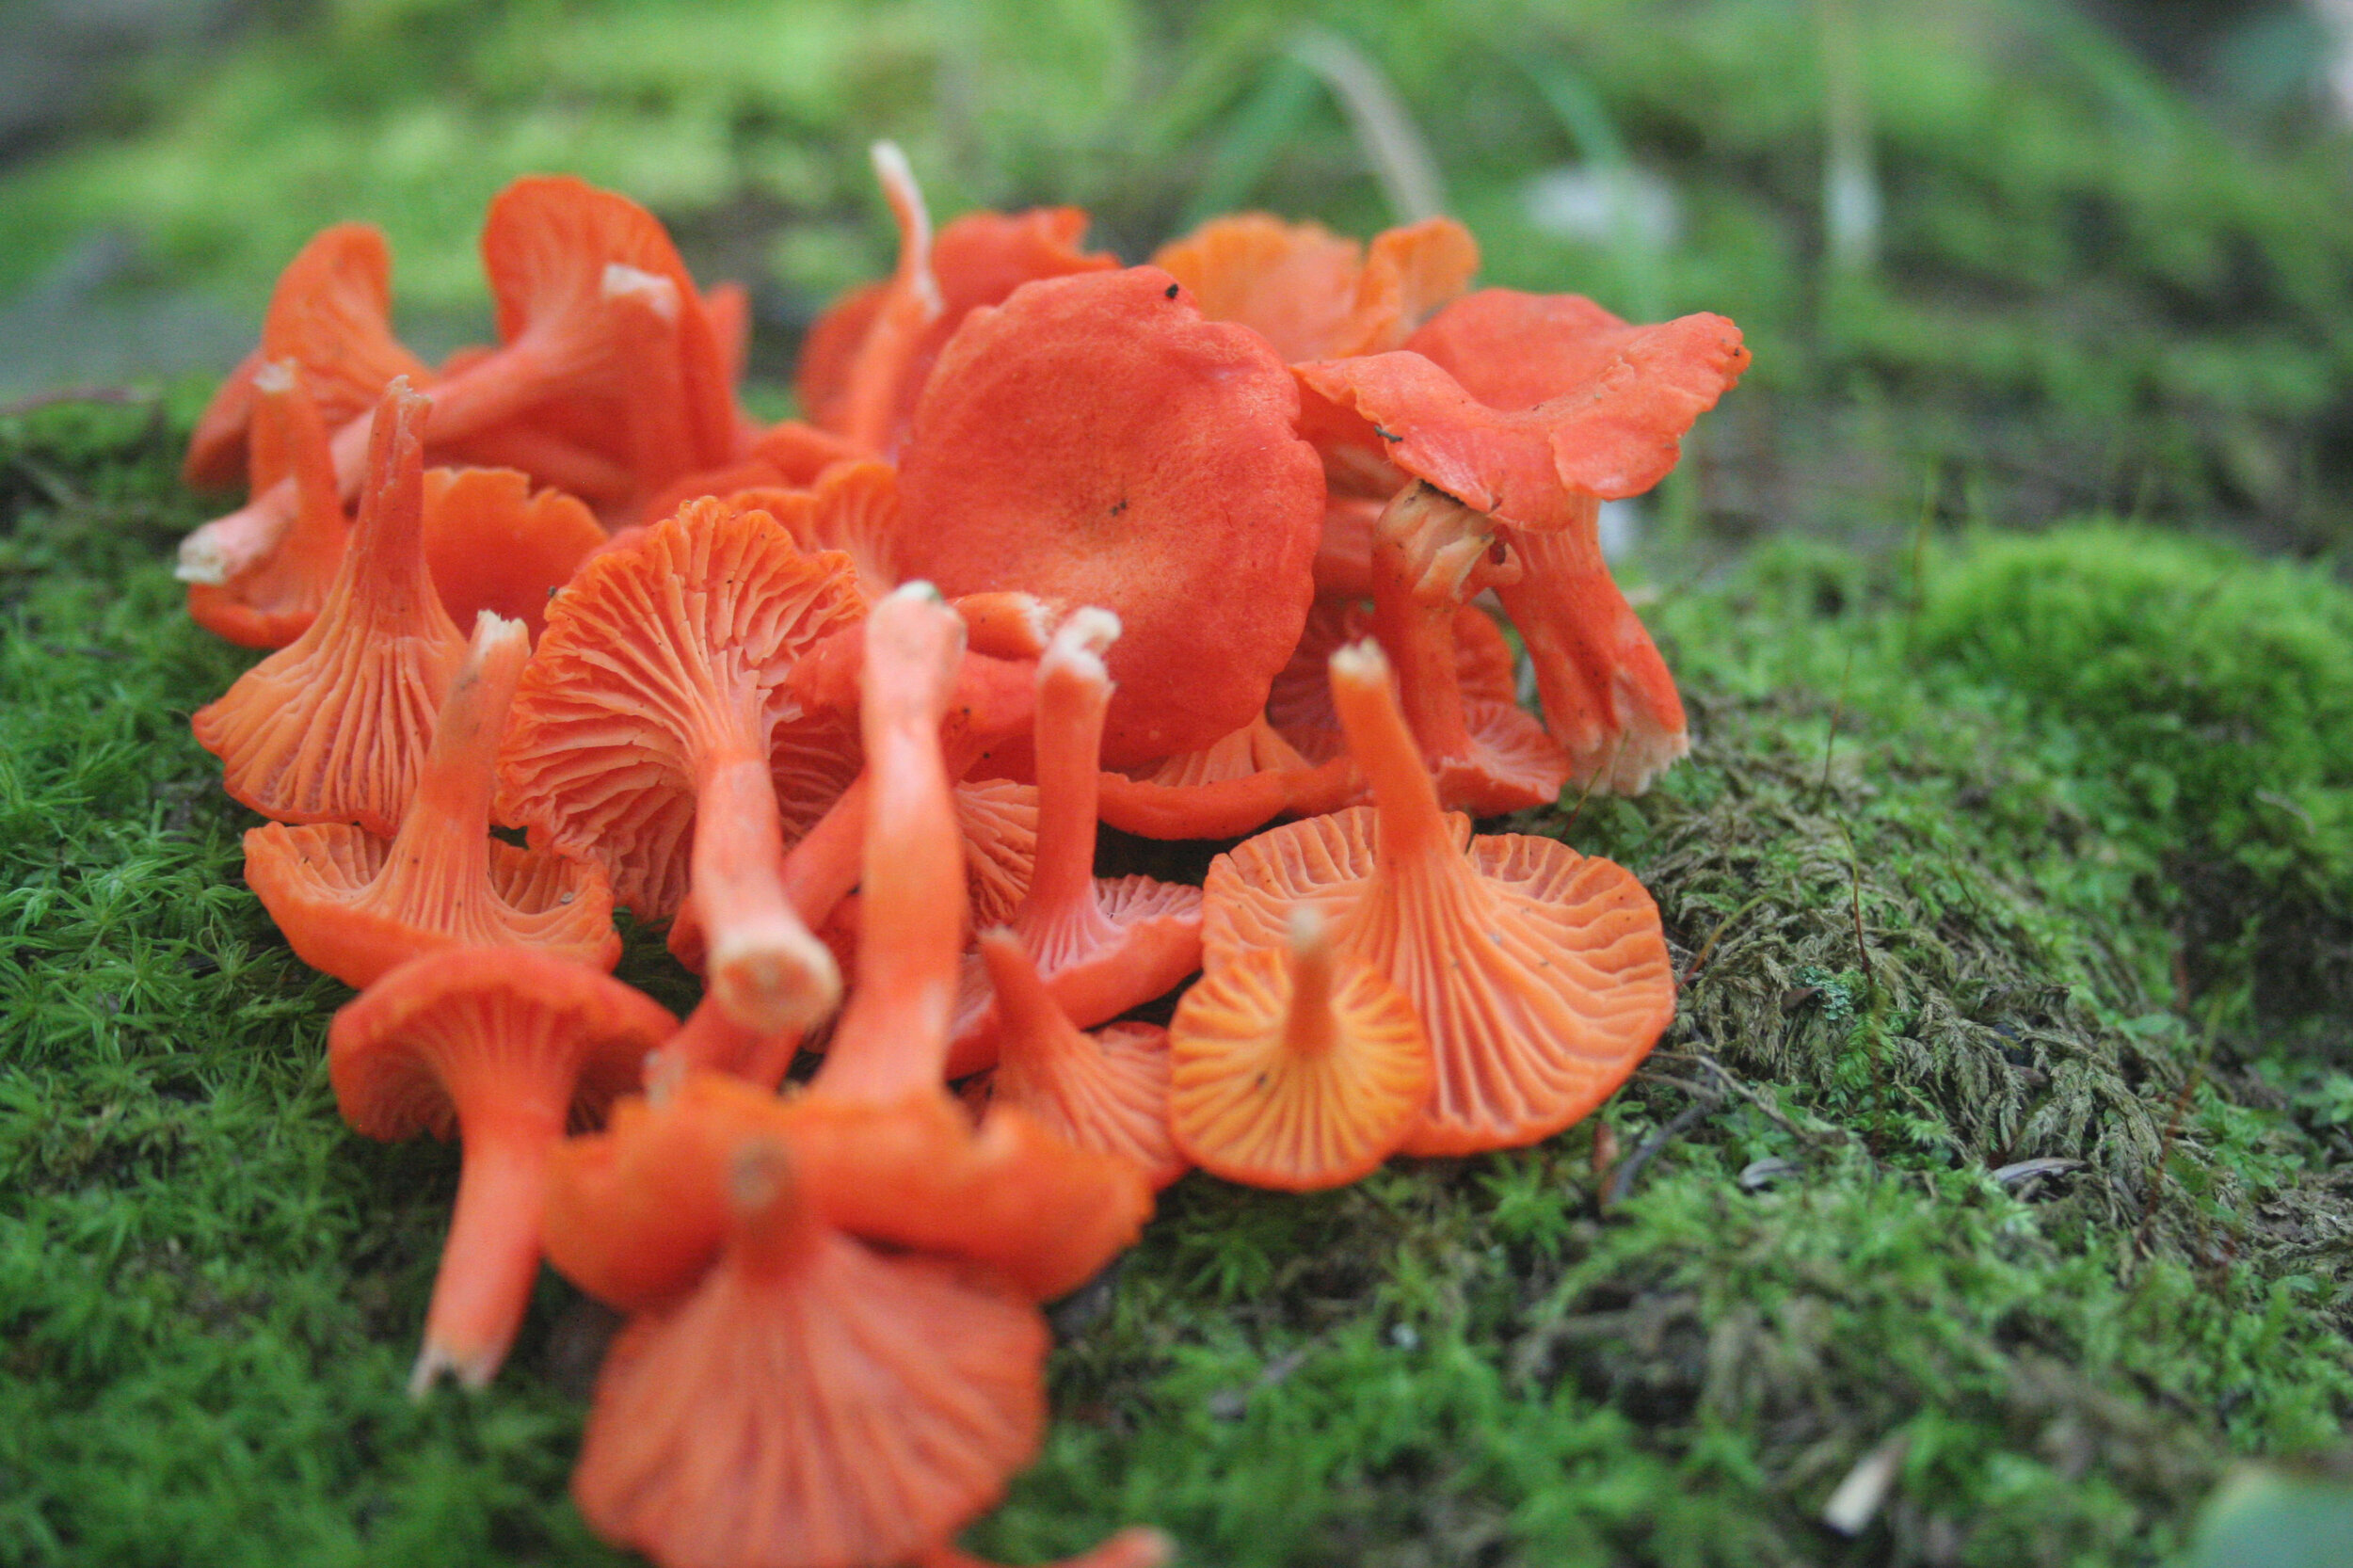 How Do You Eliminate An Orange Mushroom Naturally?